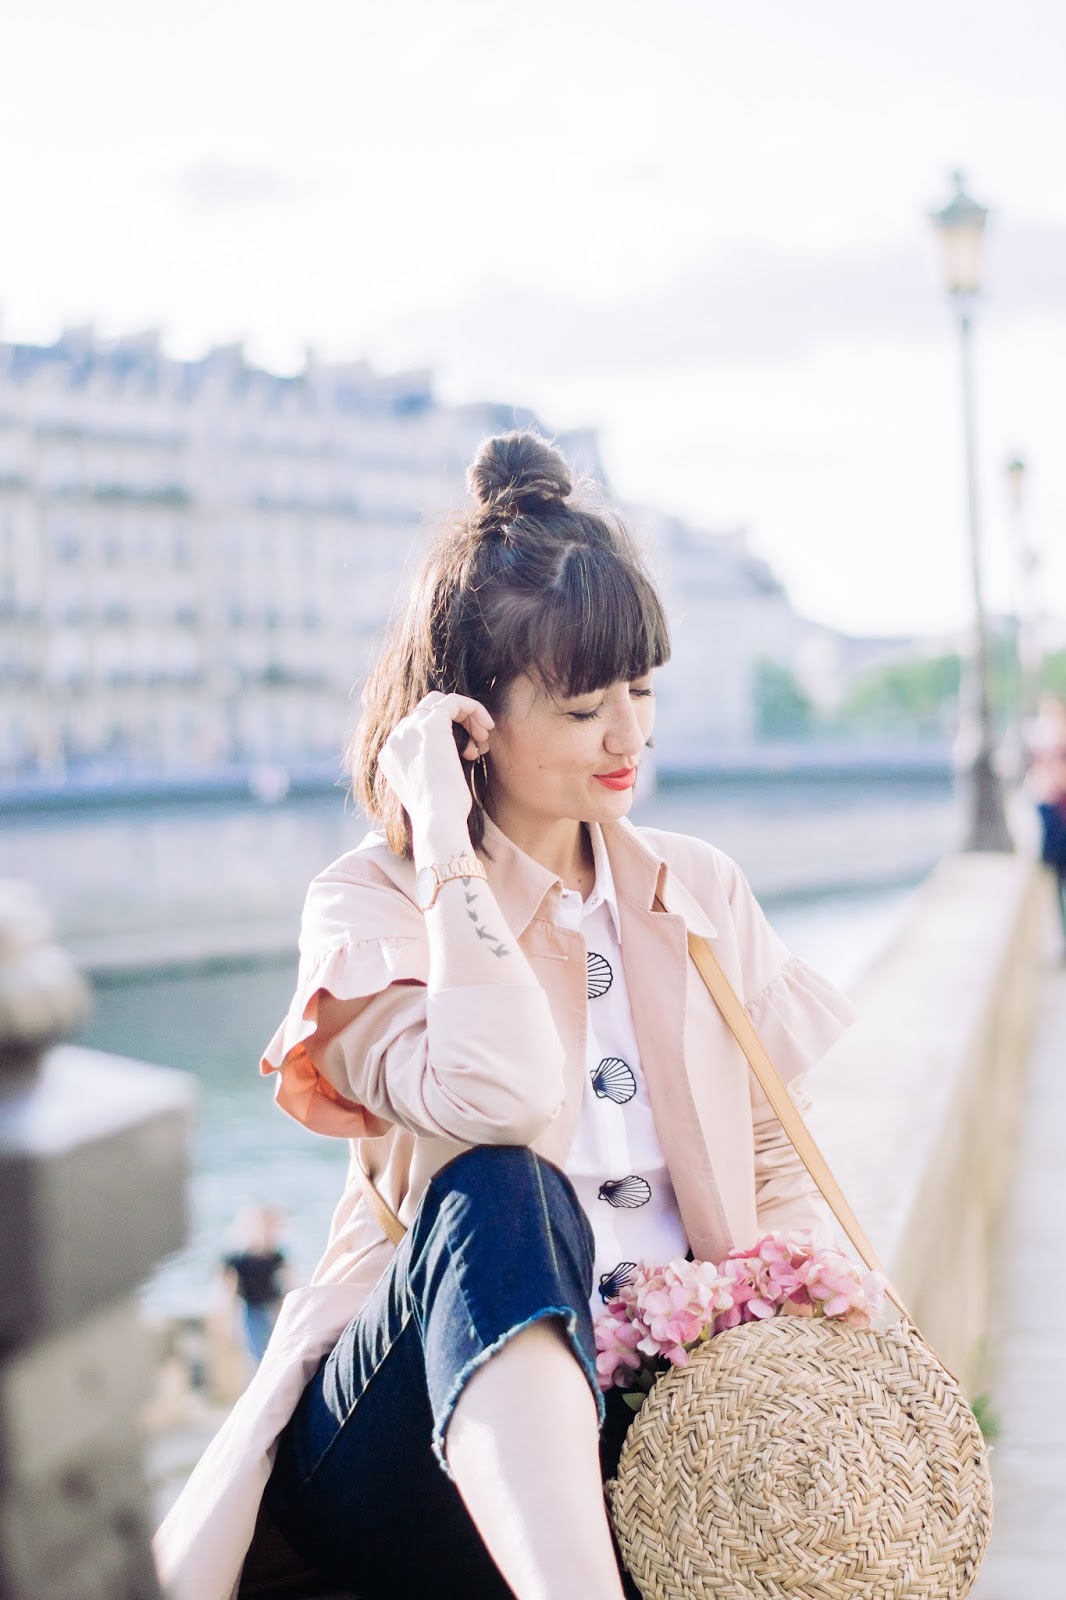 meetmeinparee-paris-mode-style-look-fashion-streetstyle-cute-parisian